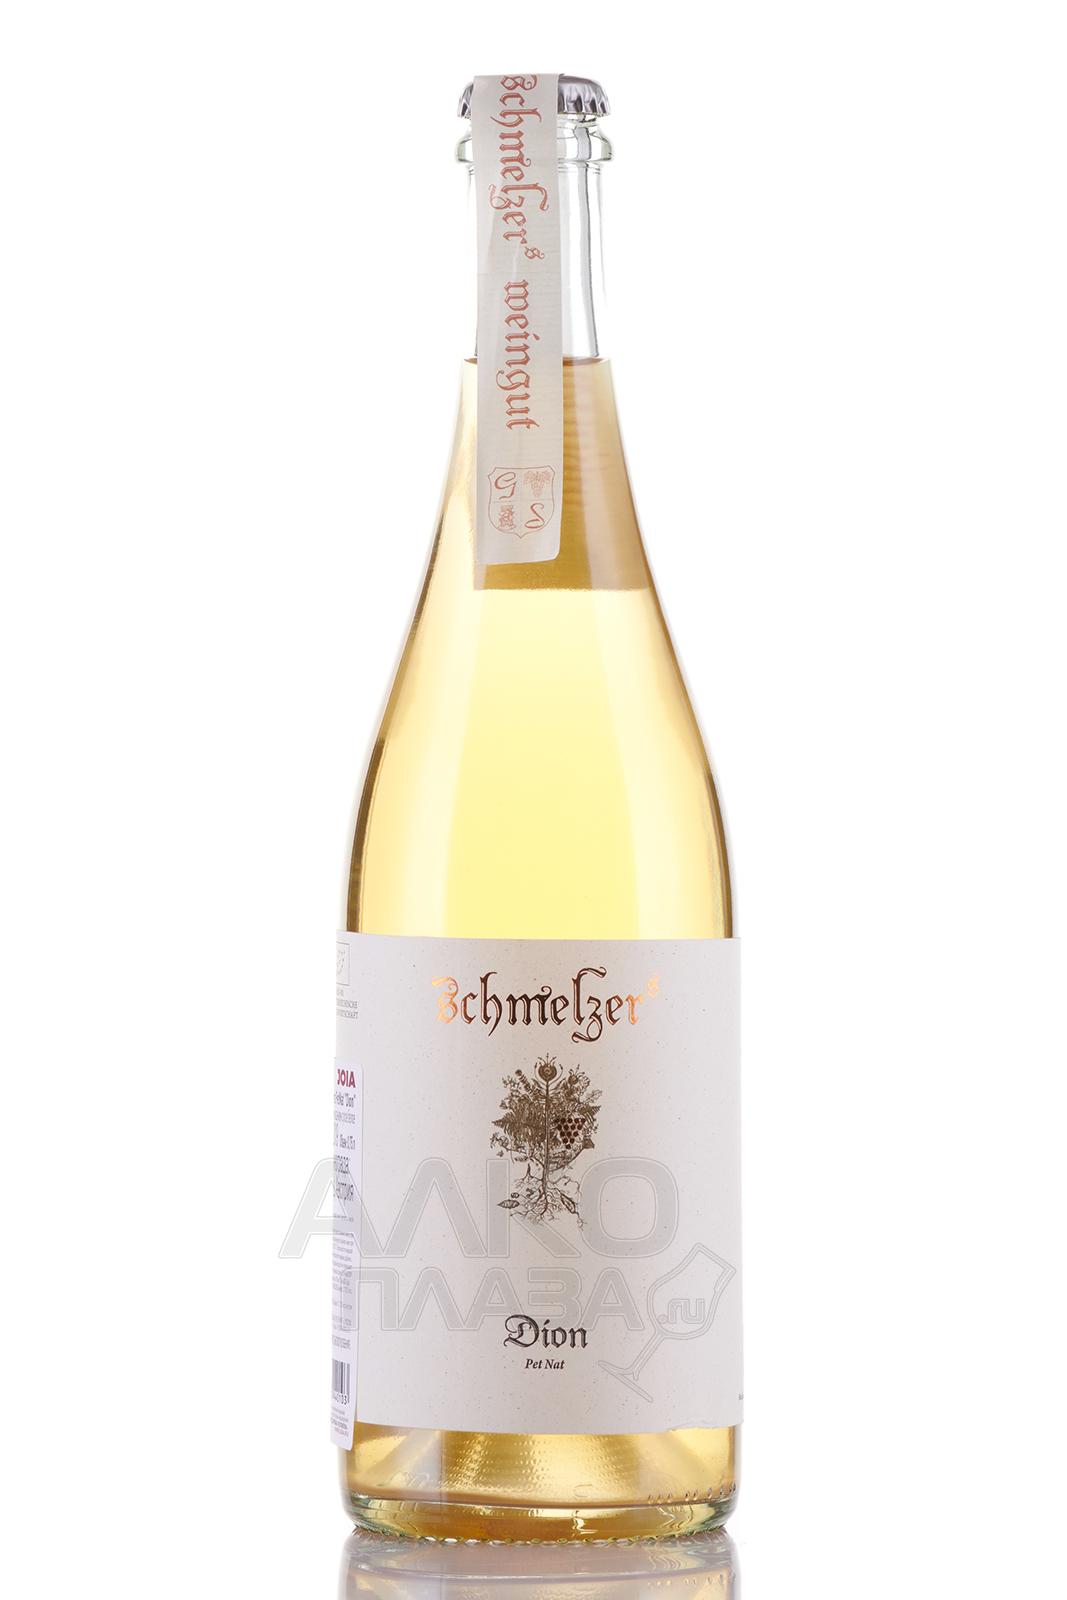 Schmelzers Dion PetNat - вино игристое Шмельцерс Дион ПетНат 0.75 л белое сухое